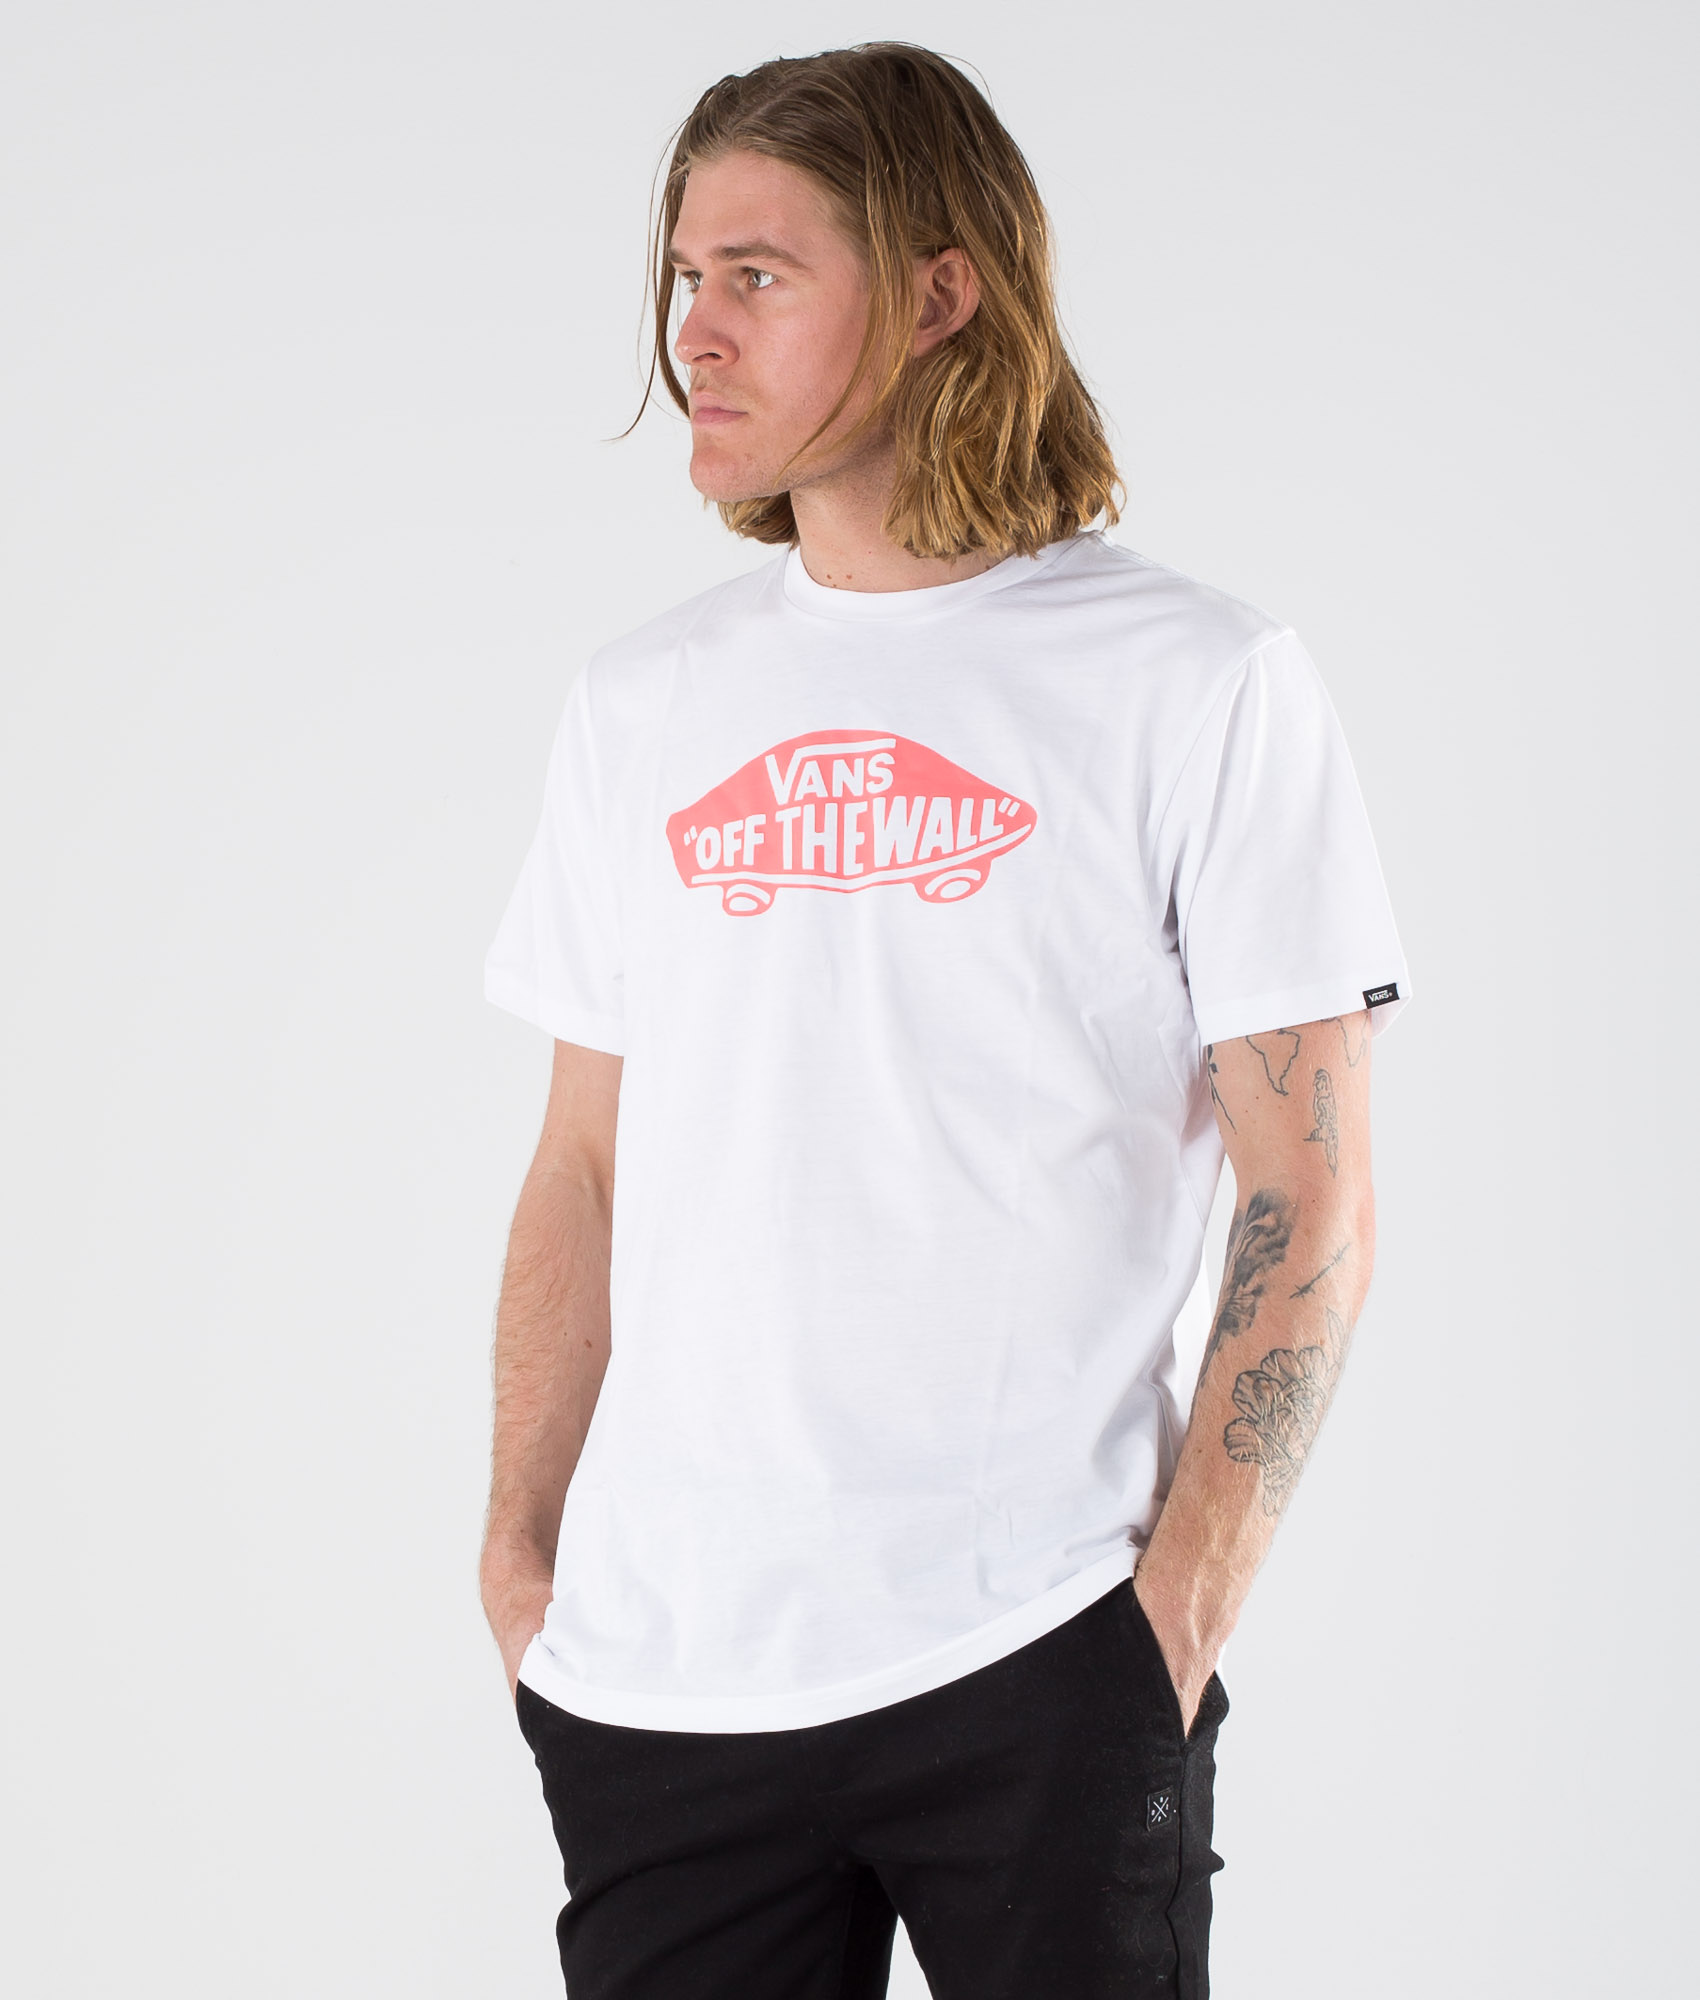 Vans OTW T-shirt White/Calypso Coral 